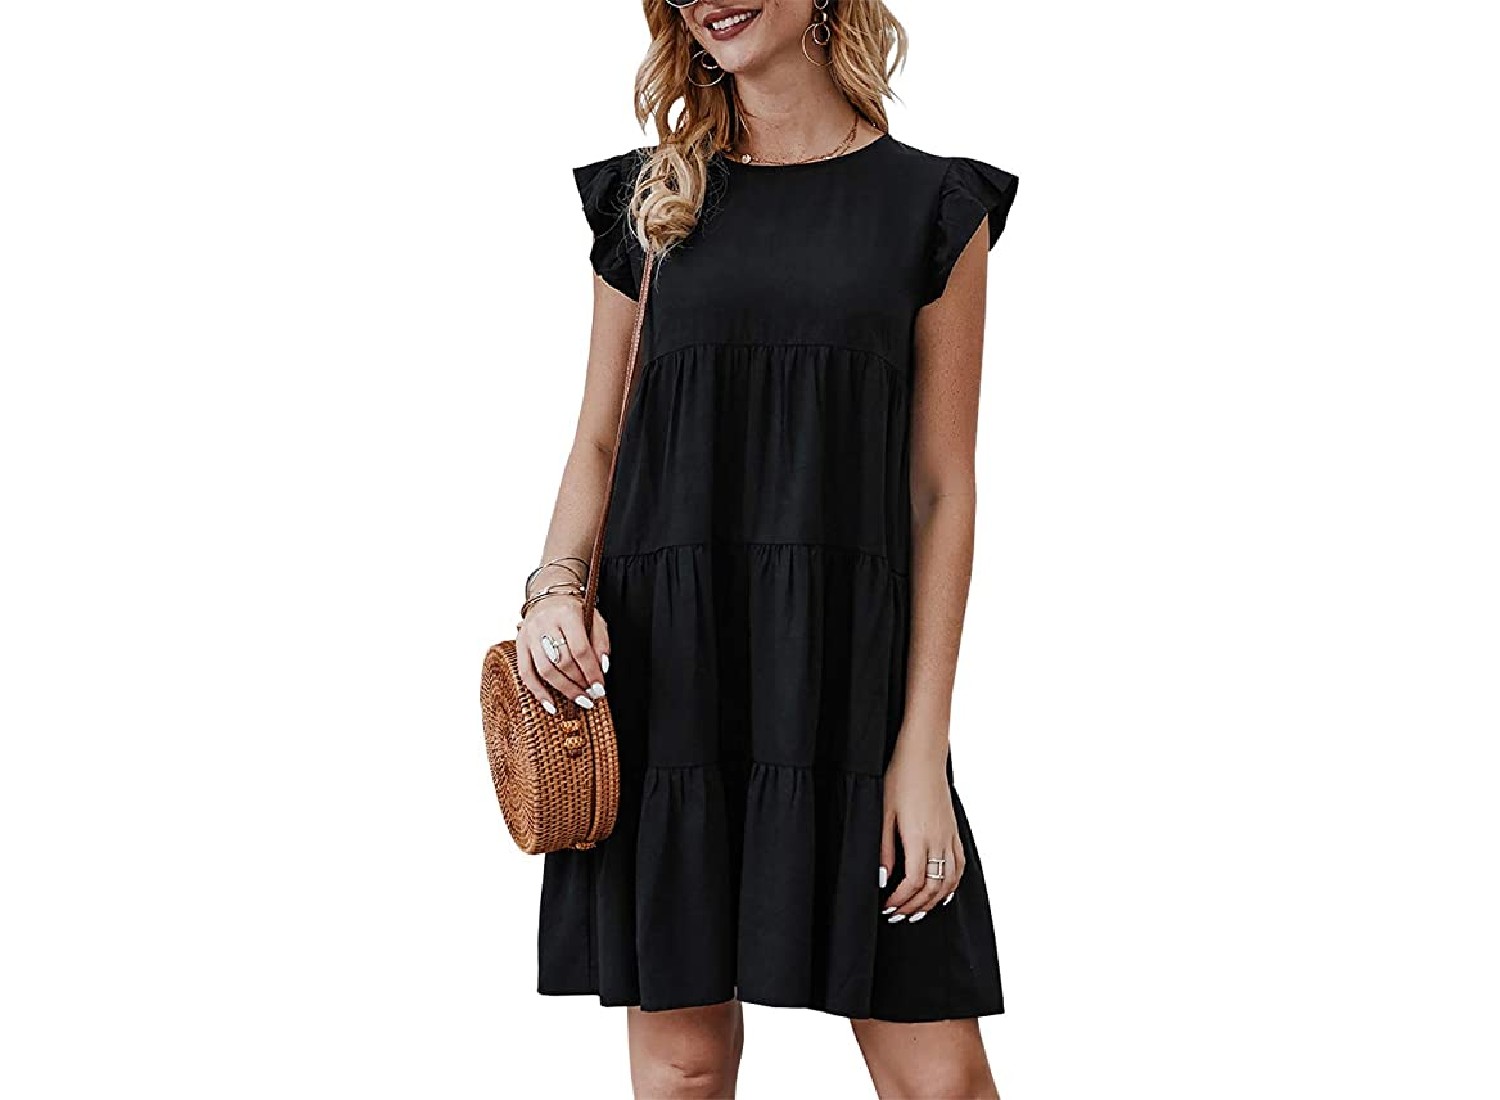 Model in a stylish black dress